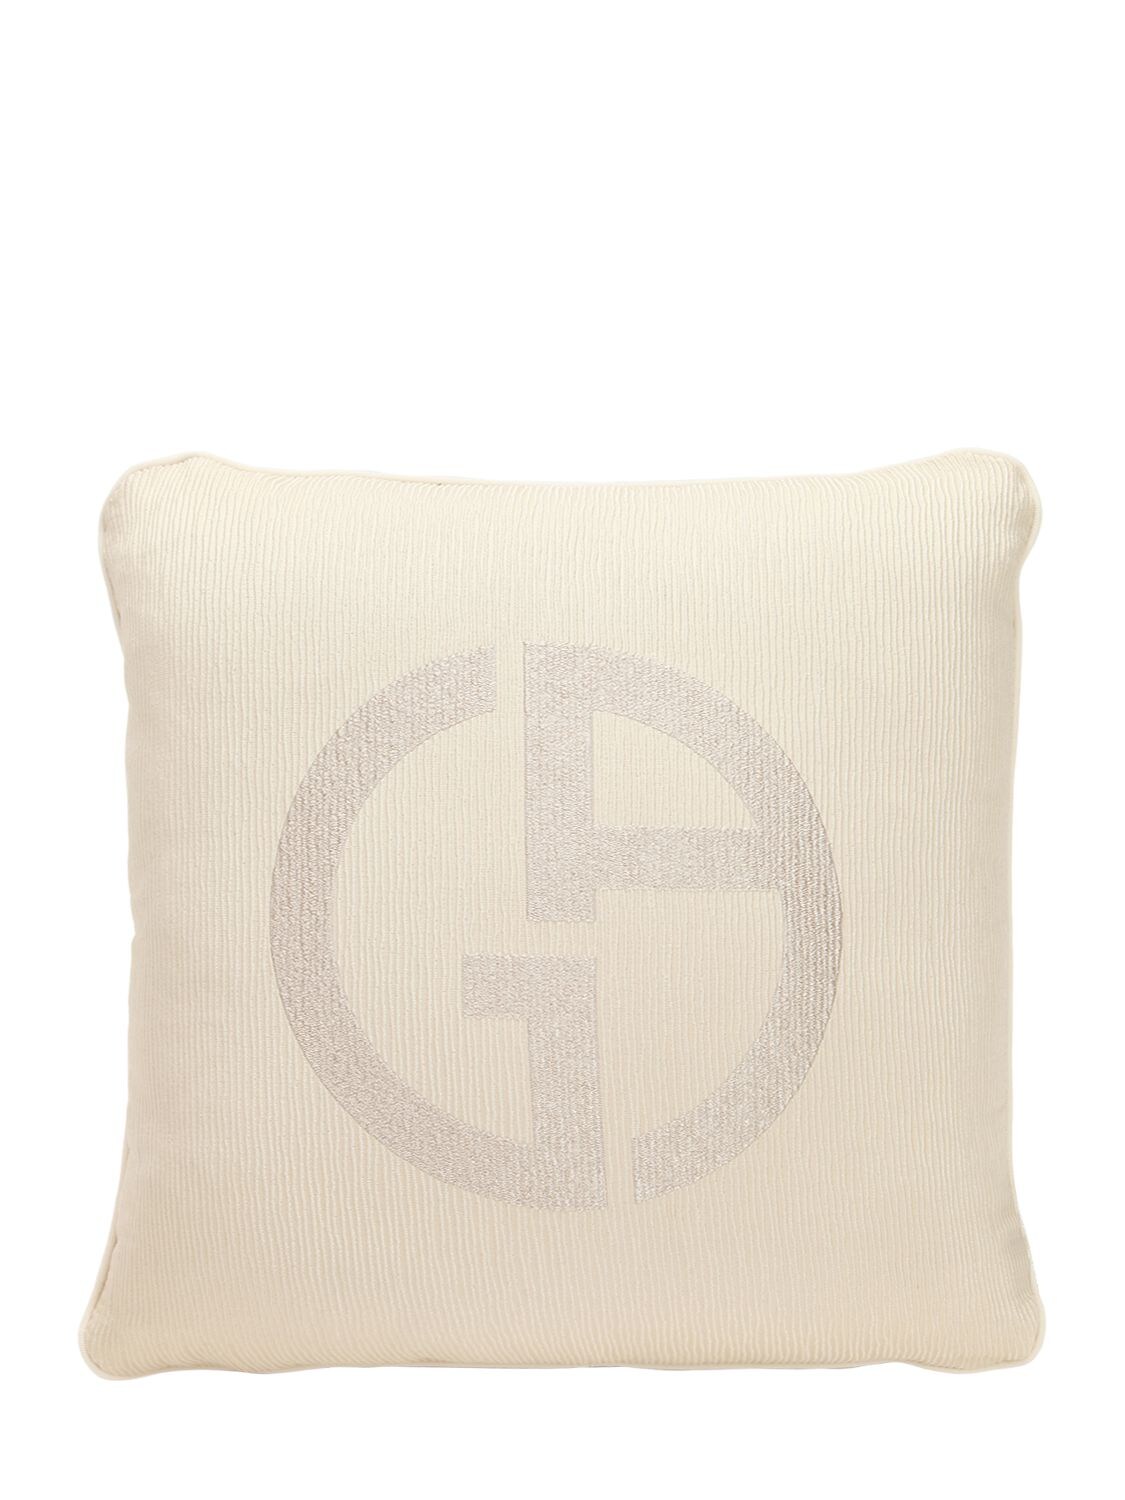 Armani/casa Janette Throw Pillow In Beige,white